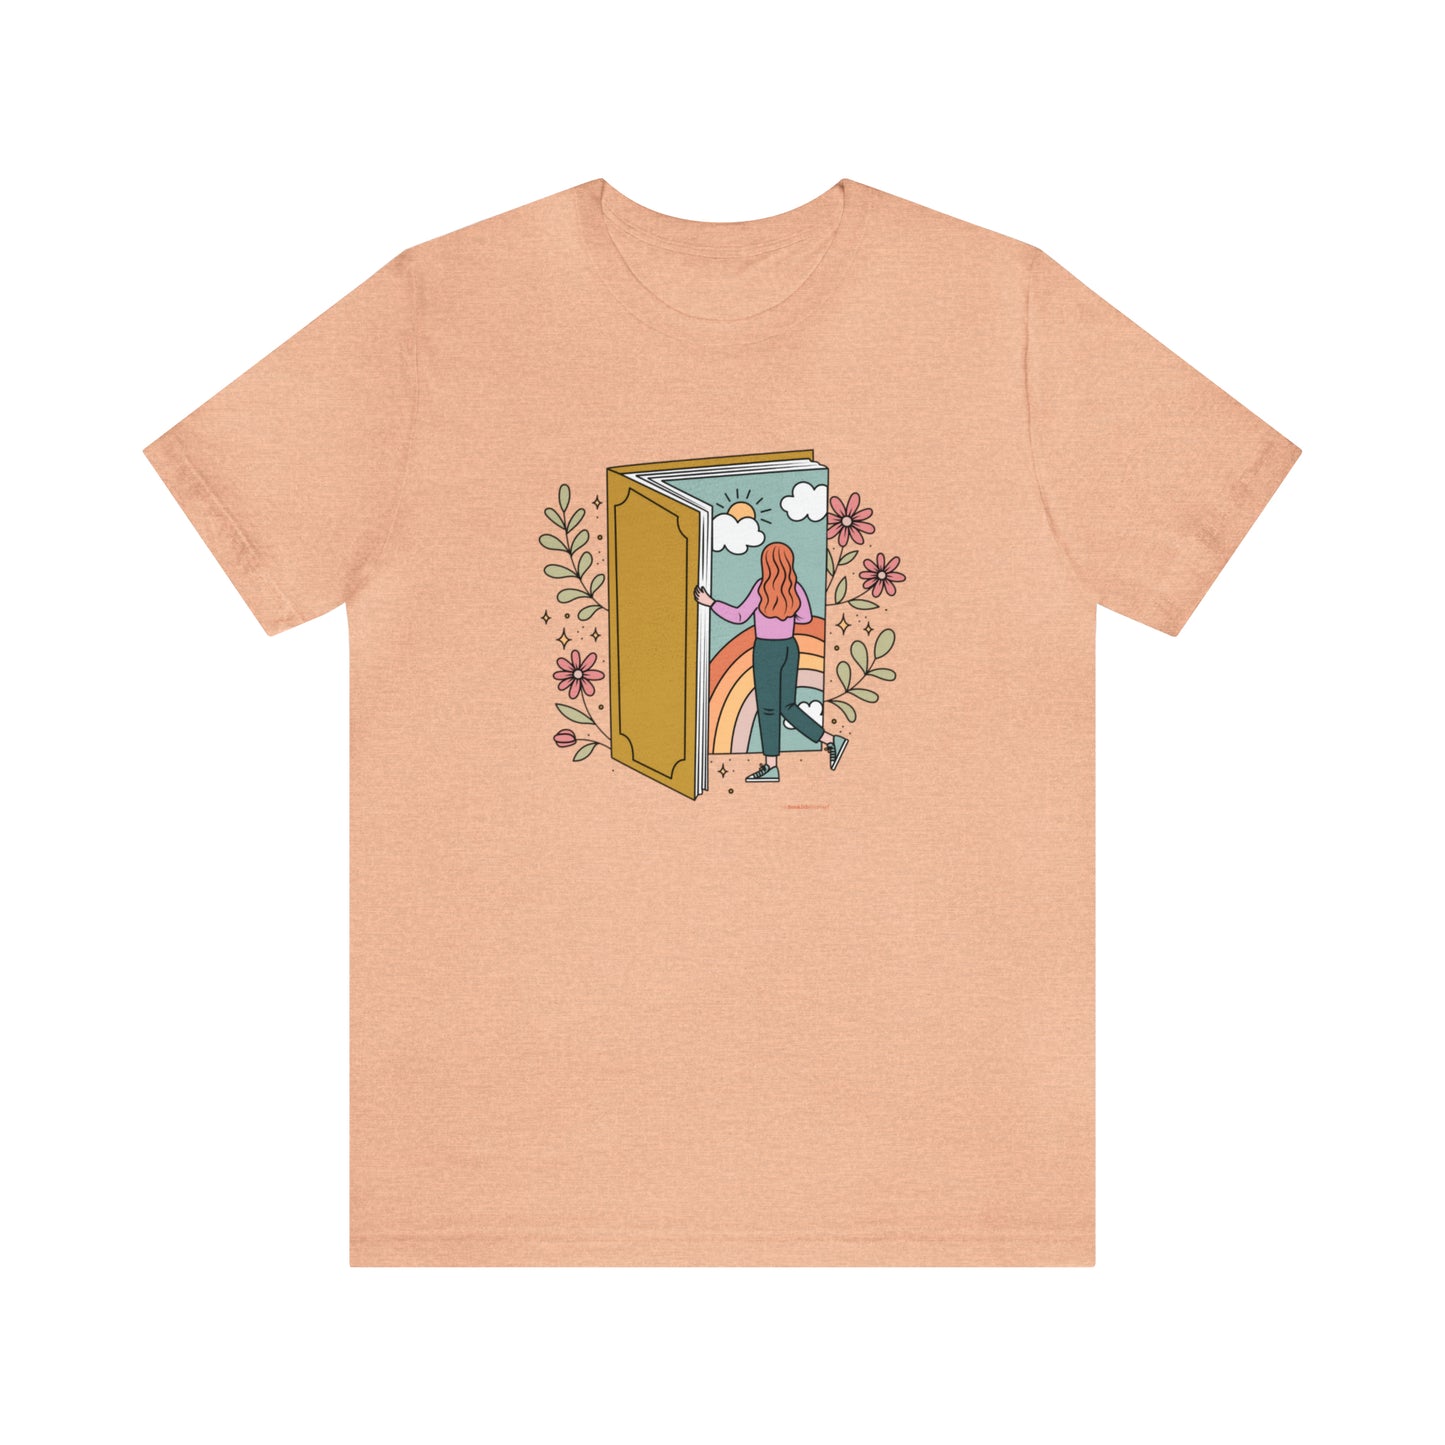 "Books are Magic" Teacher T-shirt